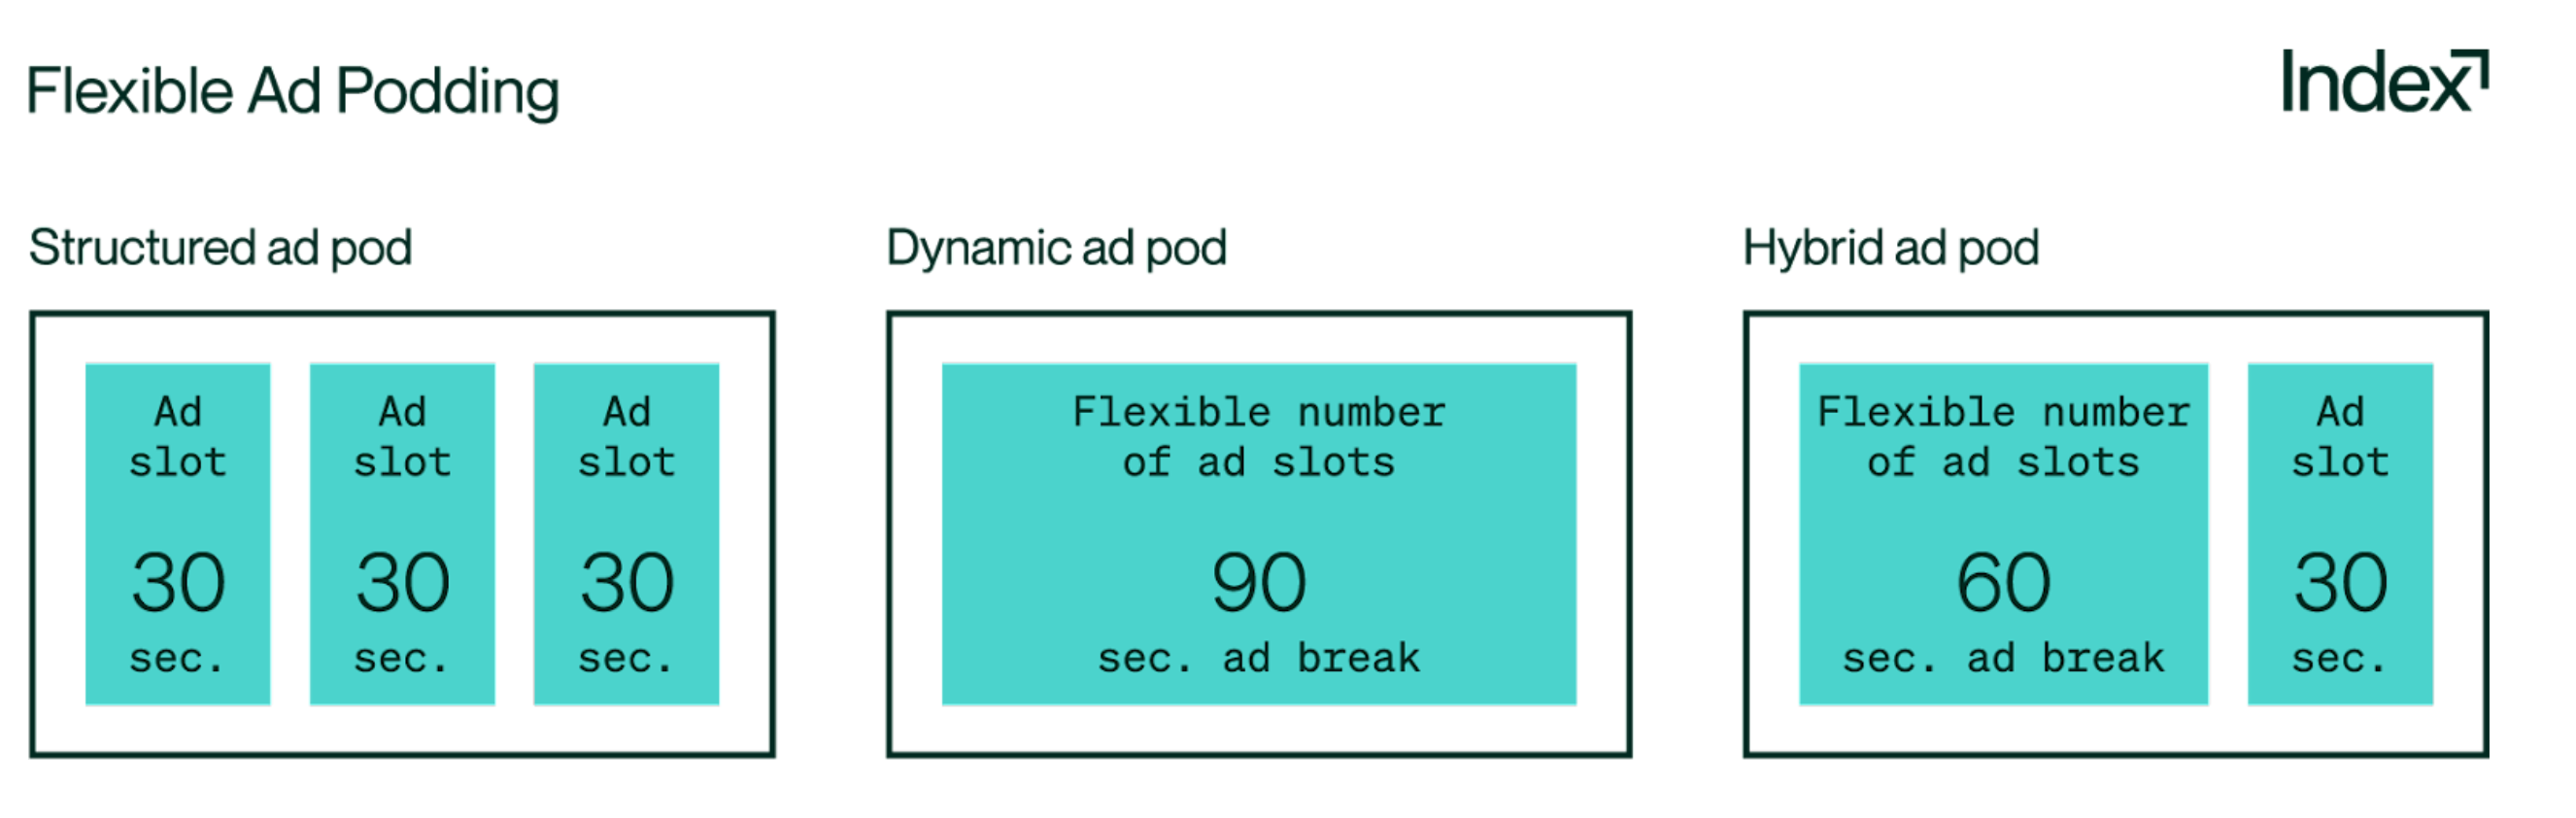 Flexible ad podding